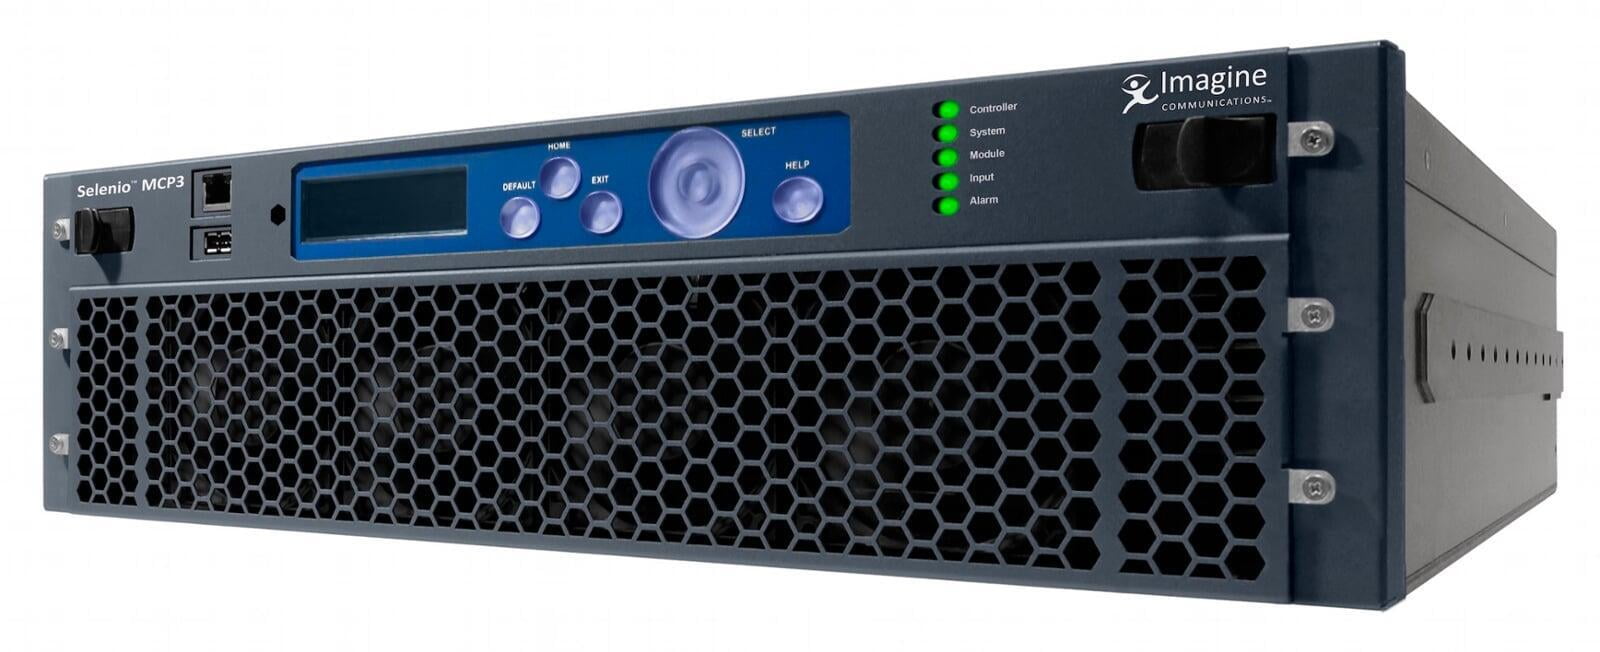 Imagine Communications - Selenio | SEL-TCIP1-S: Single-Channel TICO Mezzanine Format for UHD 3G-SDI and 10 Gig-E